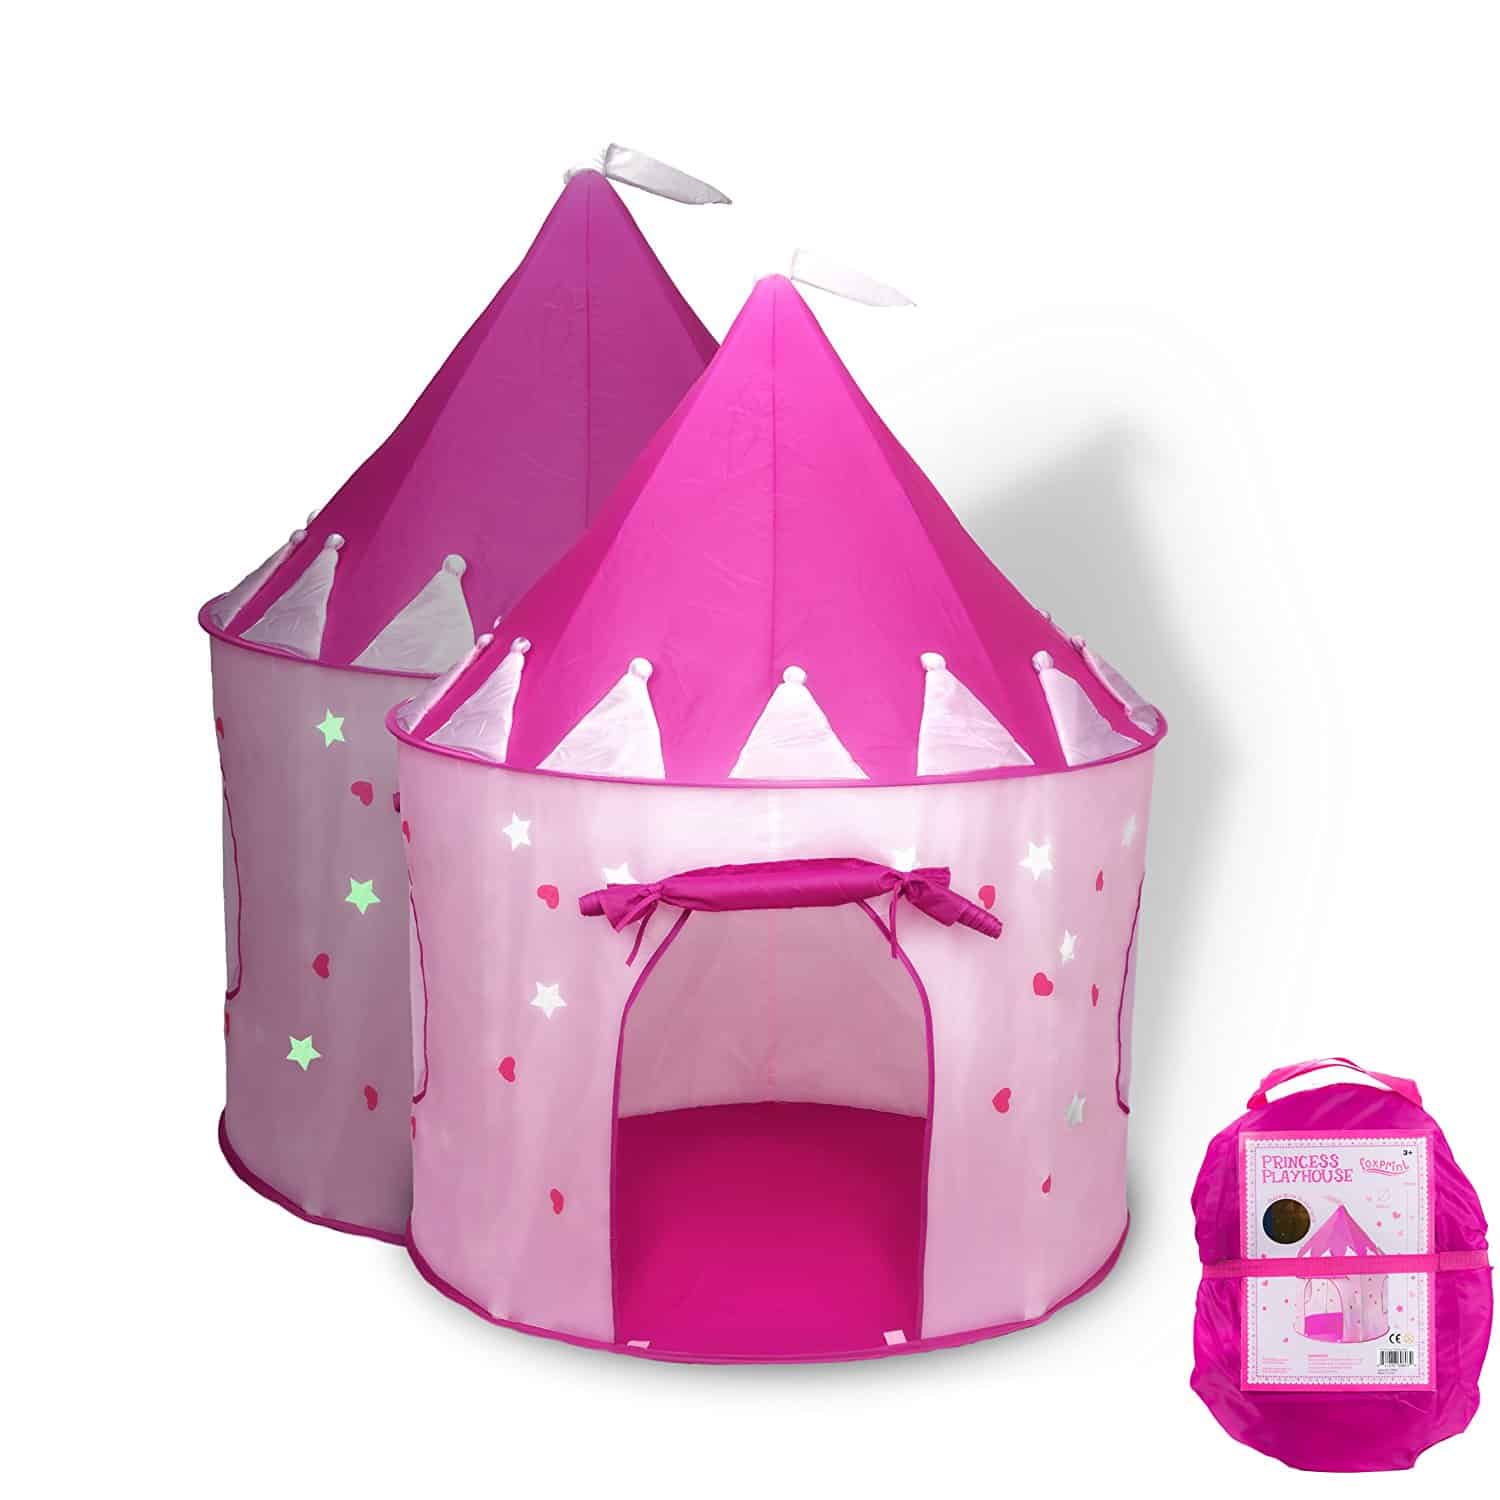 DEAL ALERT: Princess Castle Play Tent – 43% off!